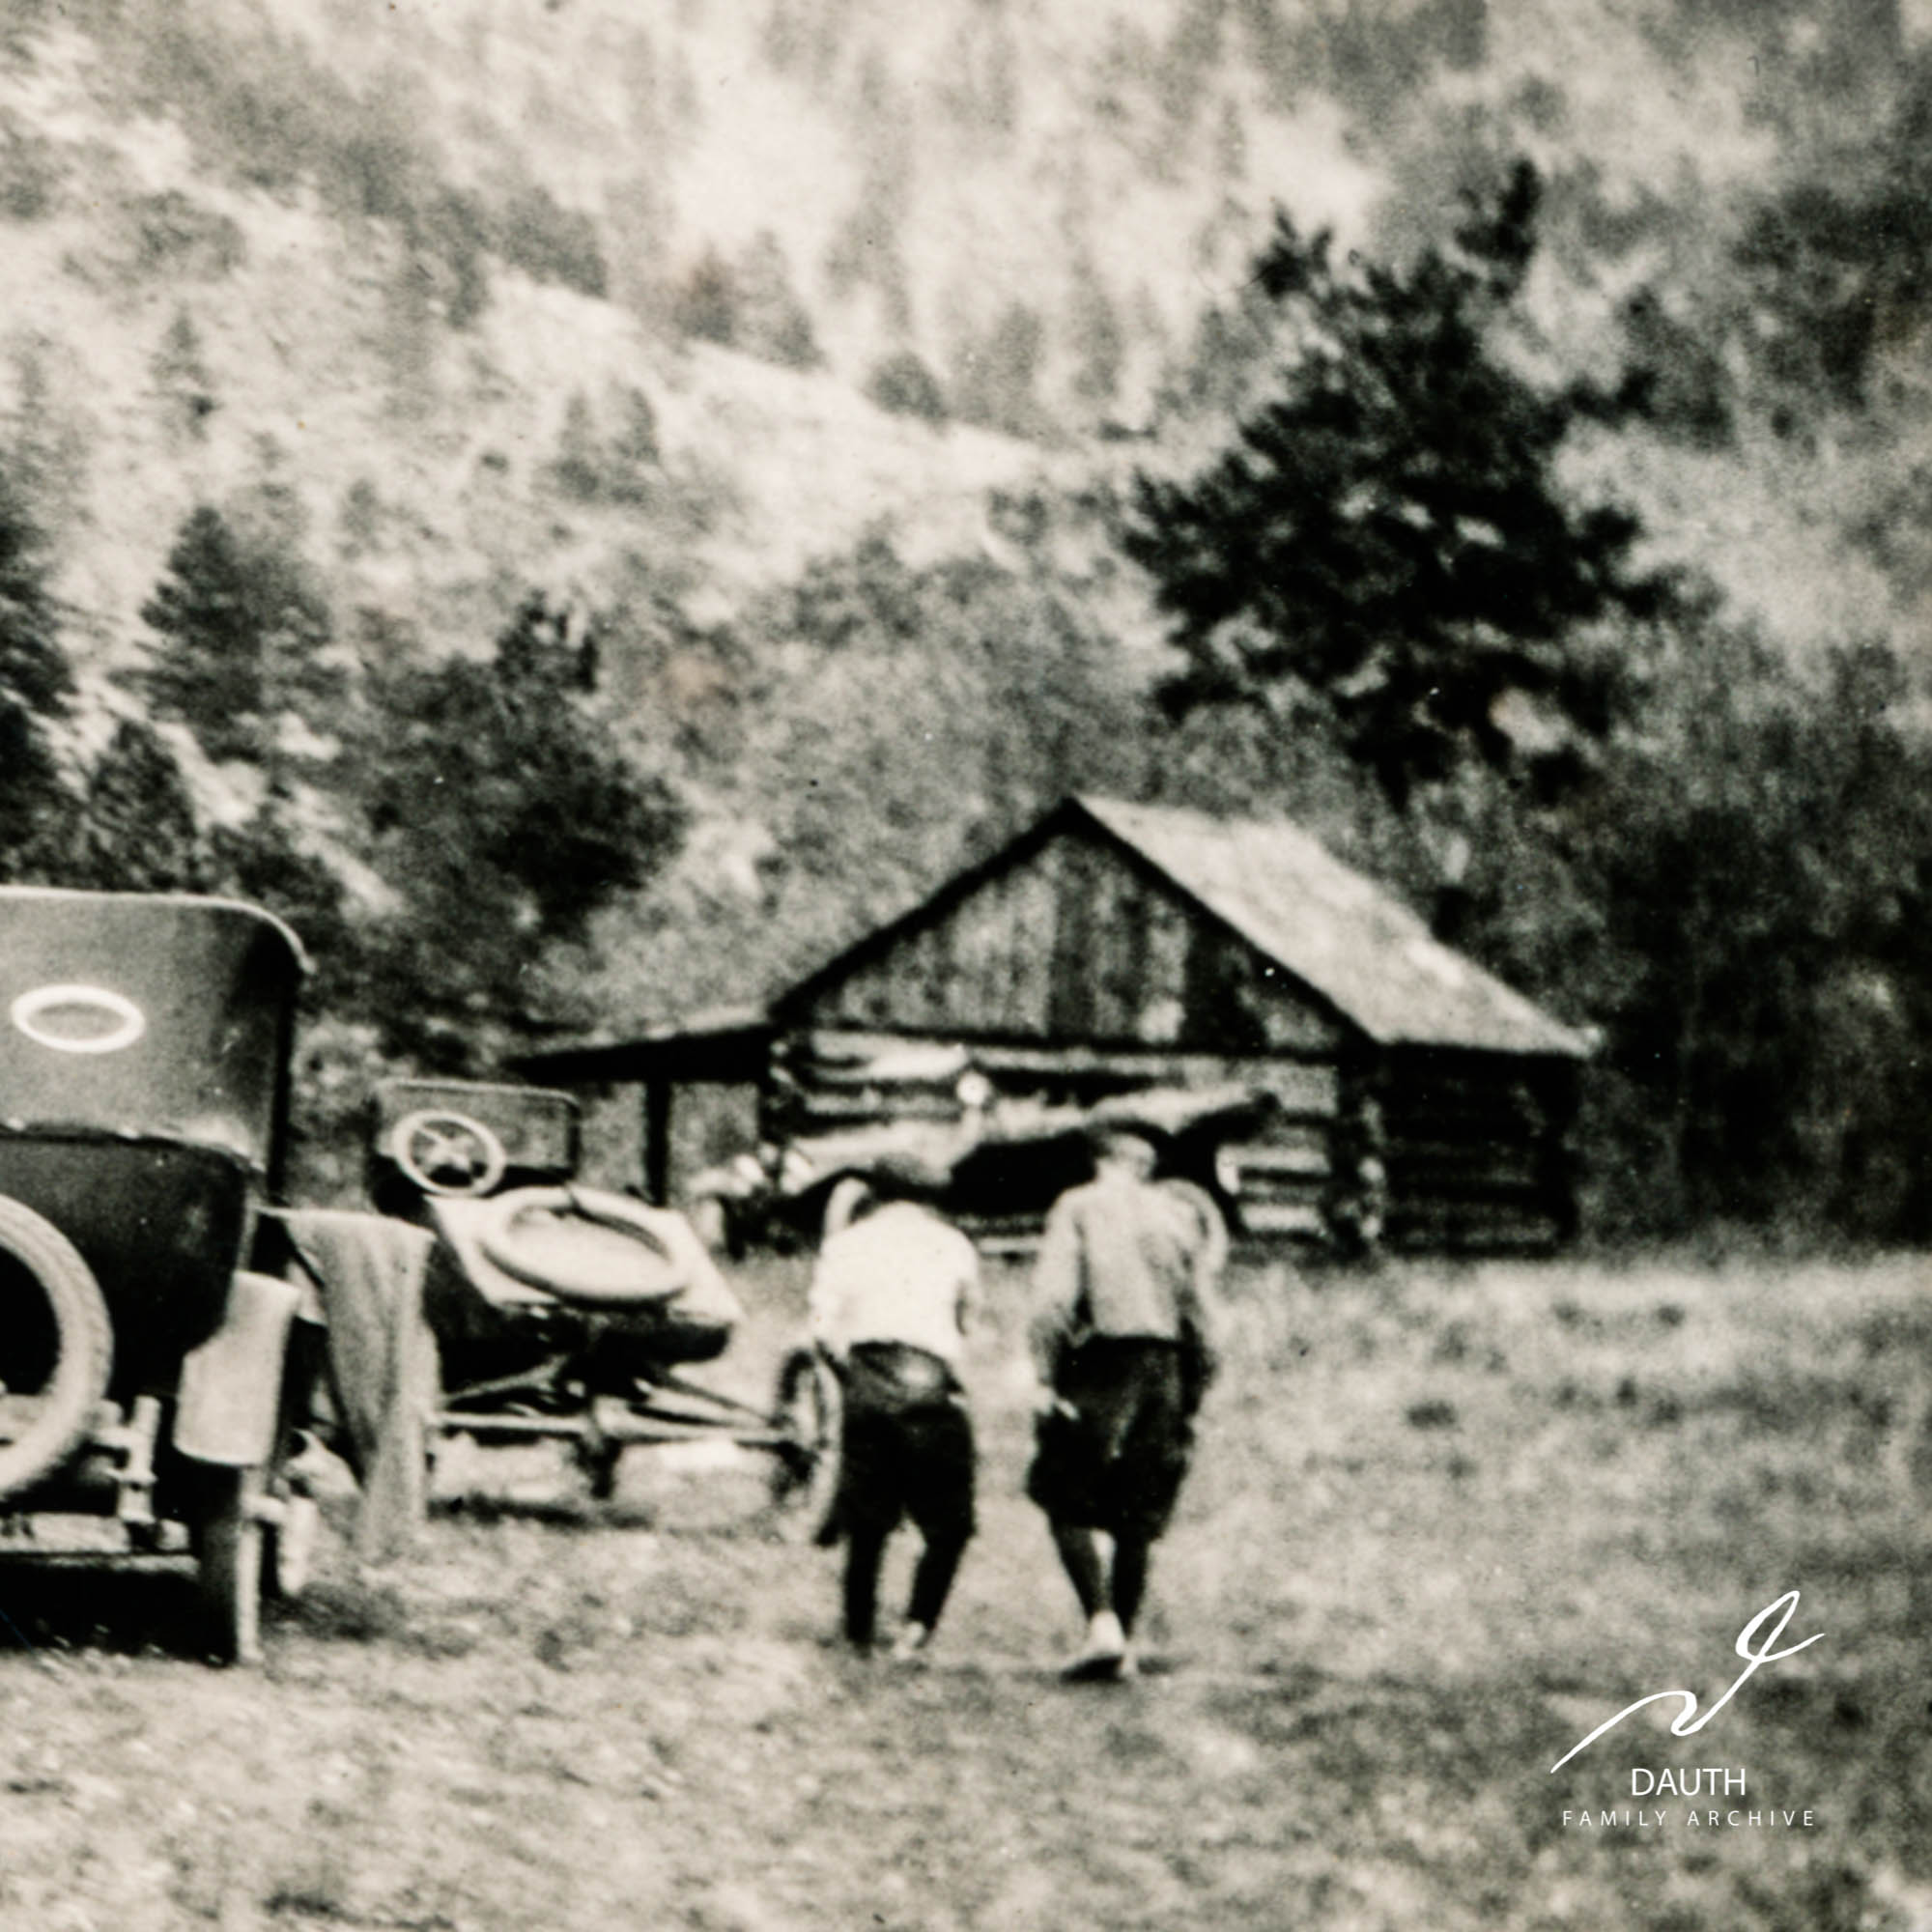 Idlewild Lodge - idlewildlodge.github.io - Circa 1920 - Closeup of the Turkington Cabin